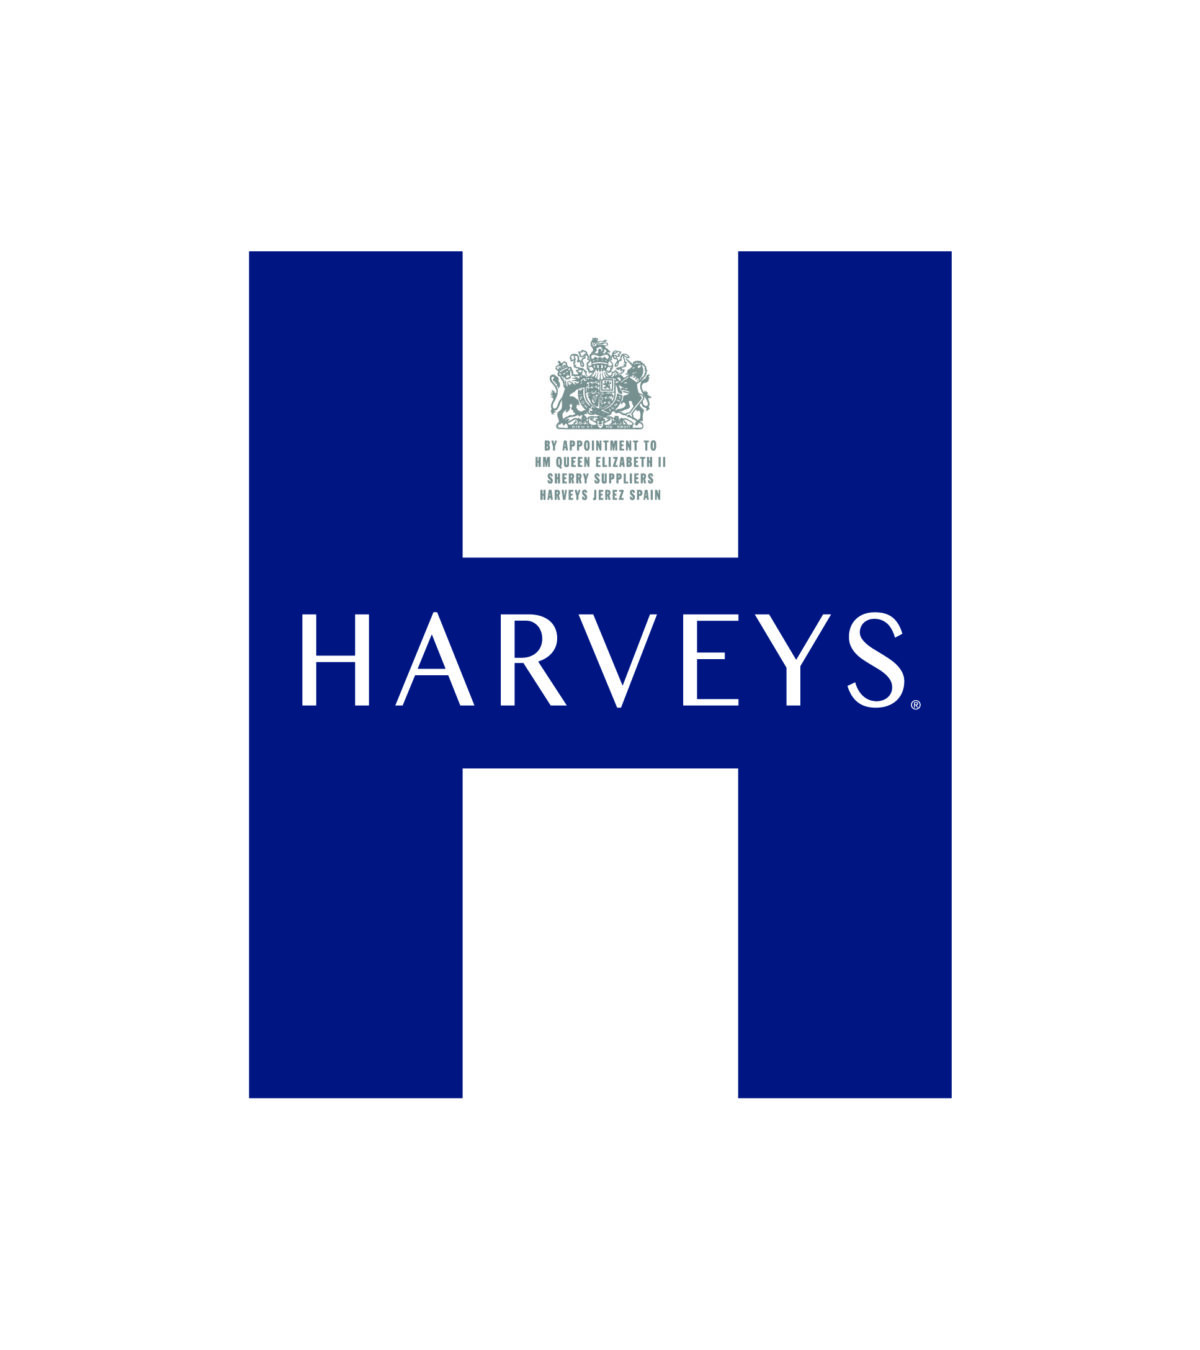 Harvey's Logo - Harveys – Gonzalez Byass